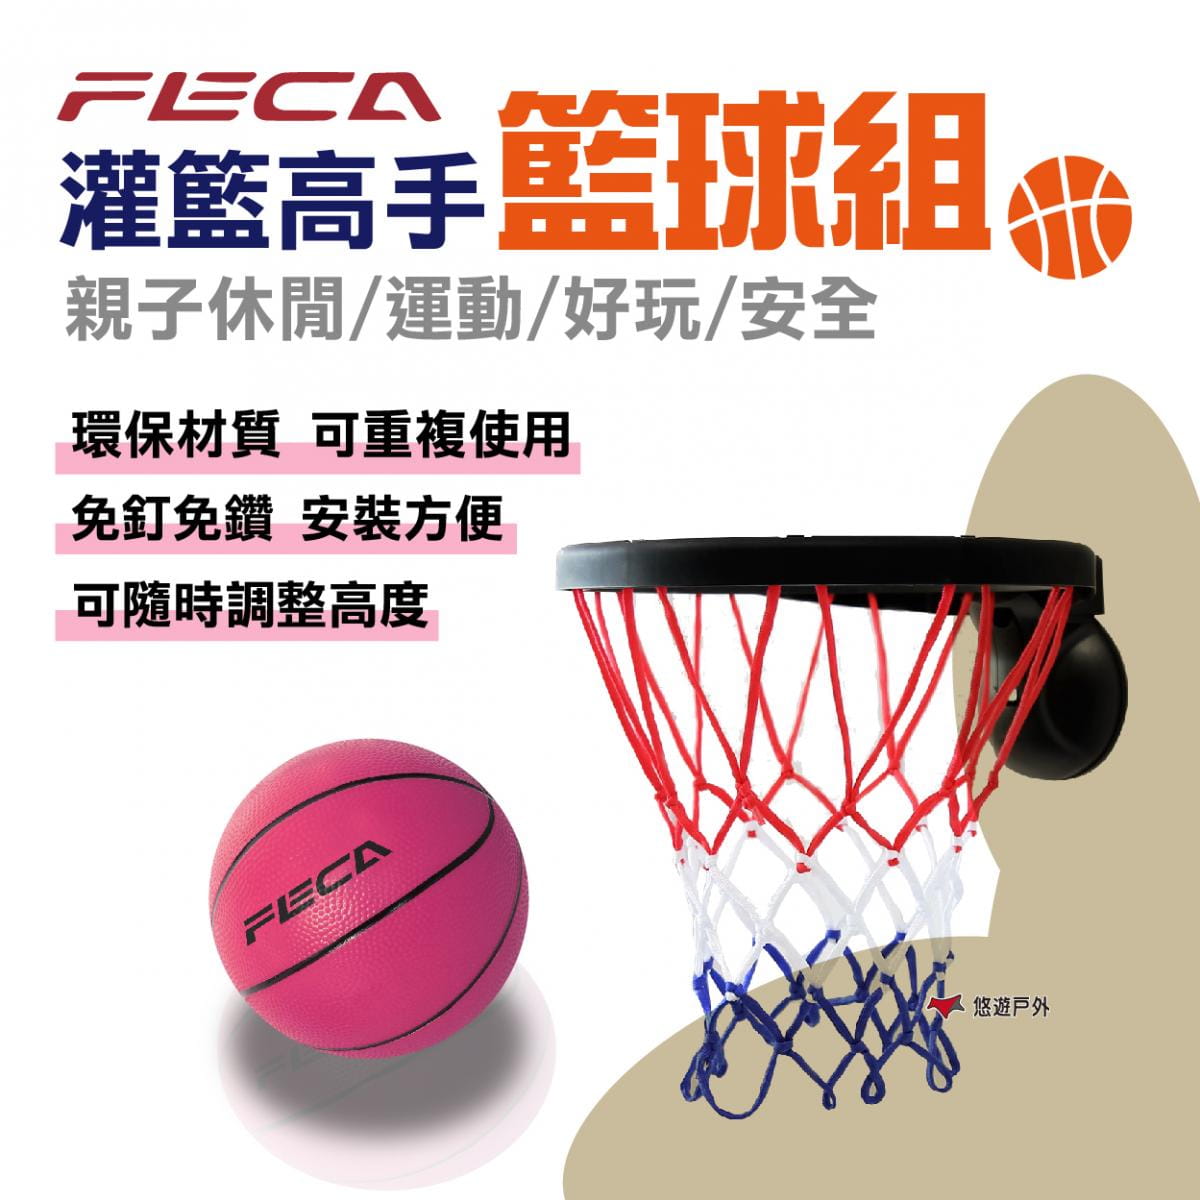 【FECA】灌籃高手籃球組 (悠遊戶外)